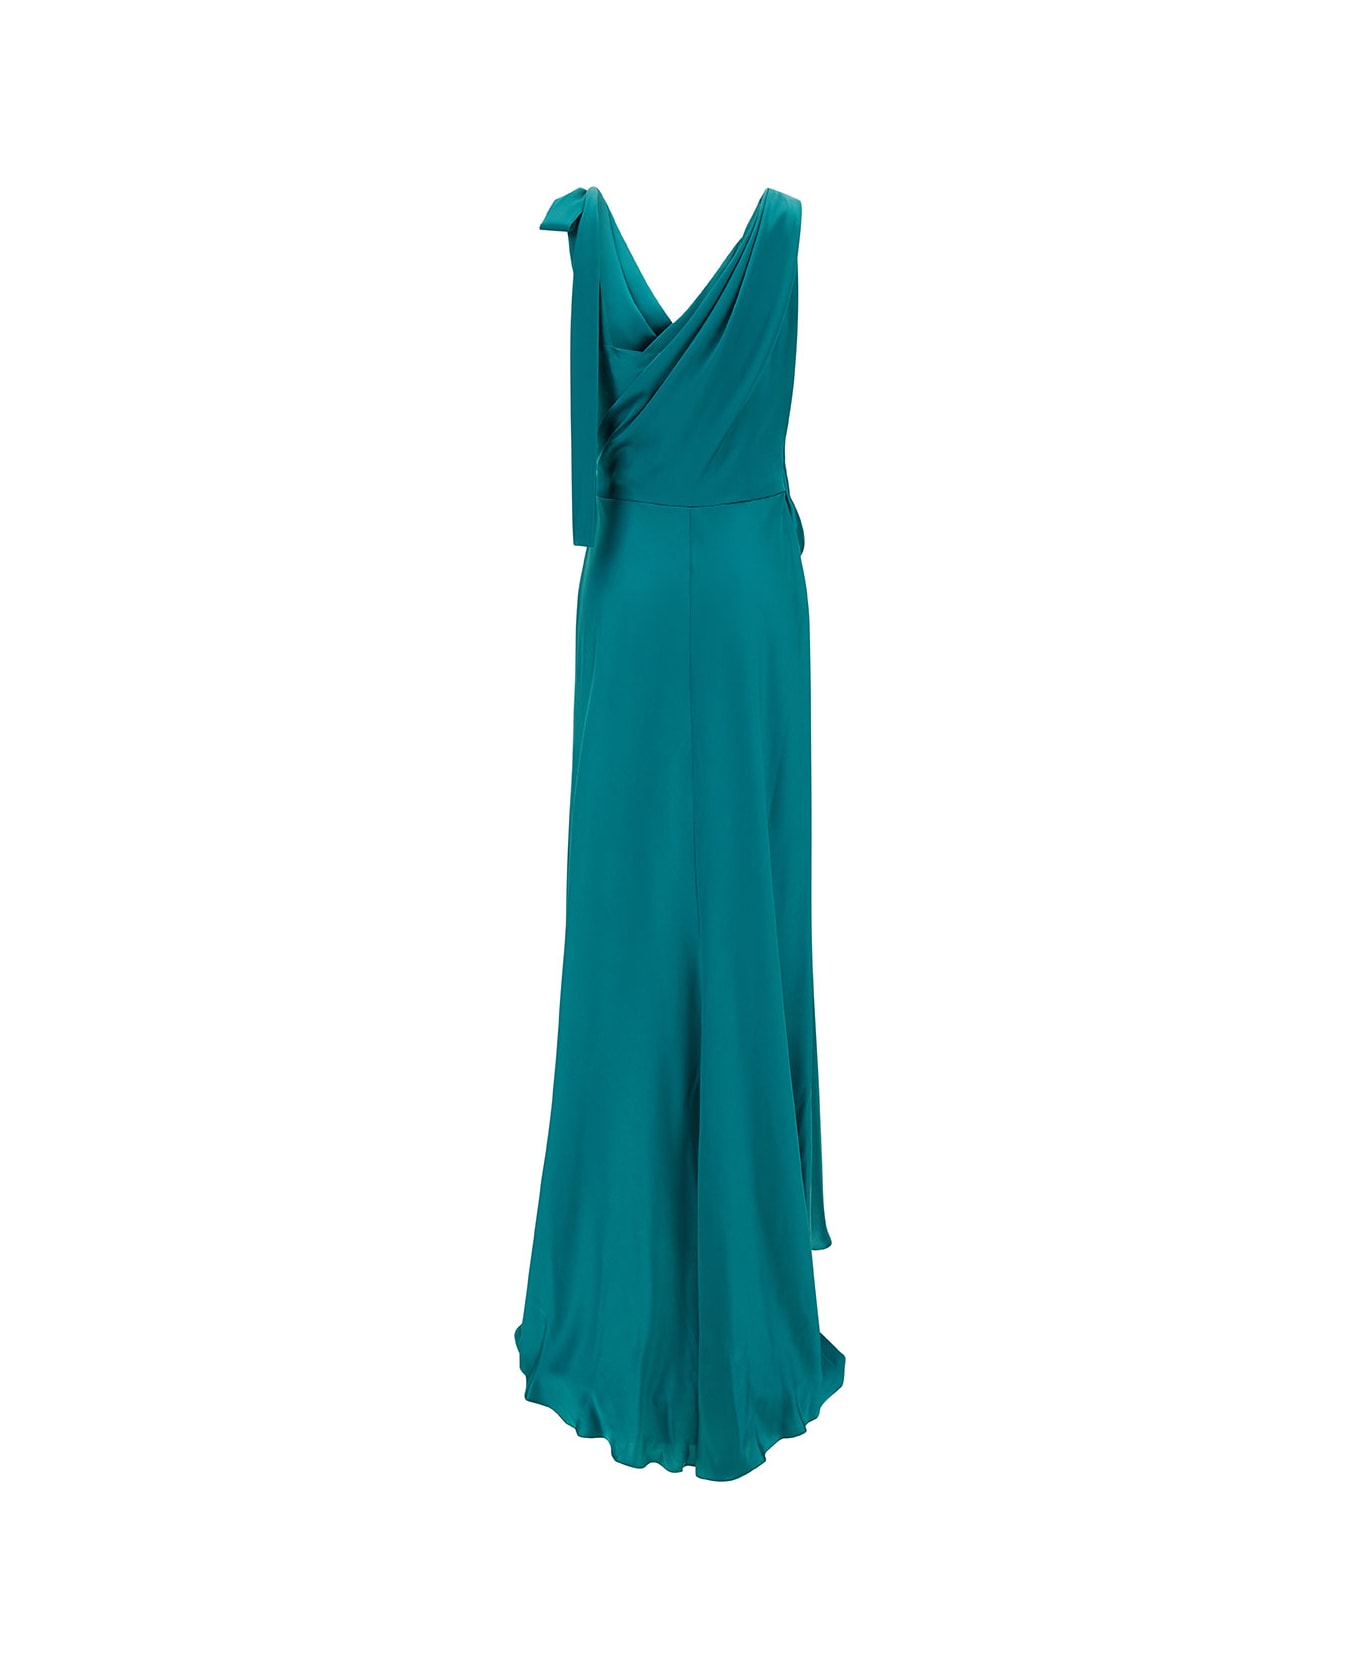 Alberta Ferretti Blue Long Draped Dress With V Neckline In Satin Woman - TEAL